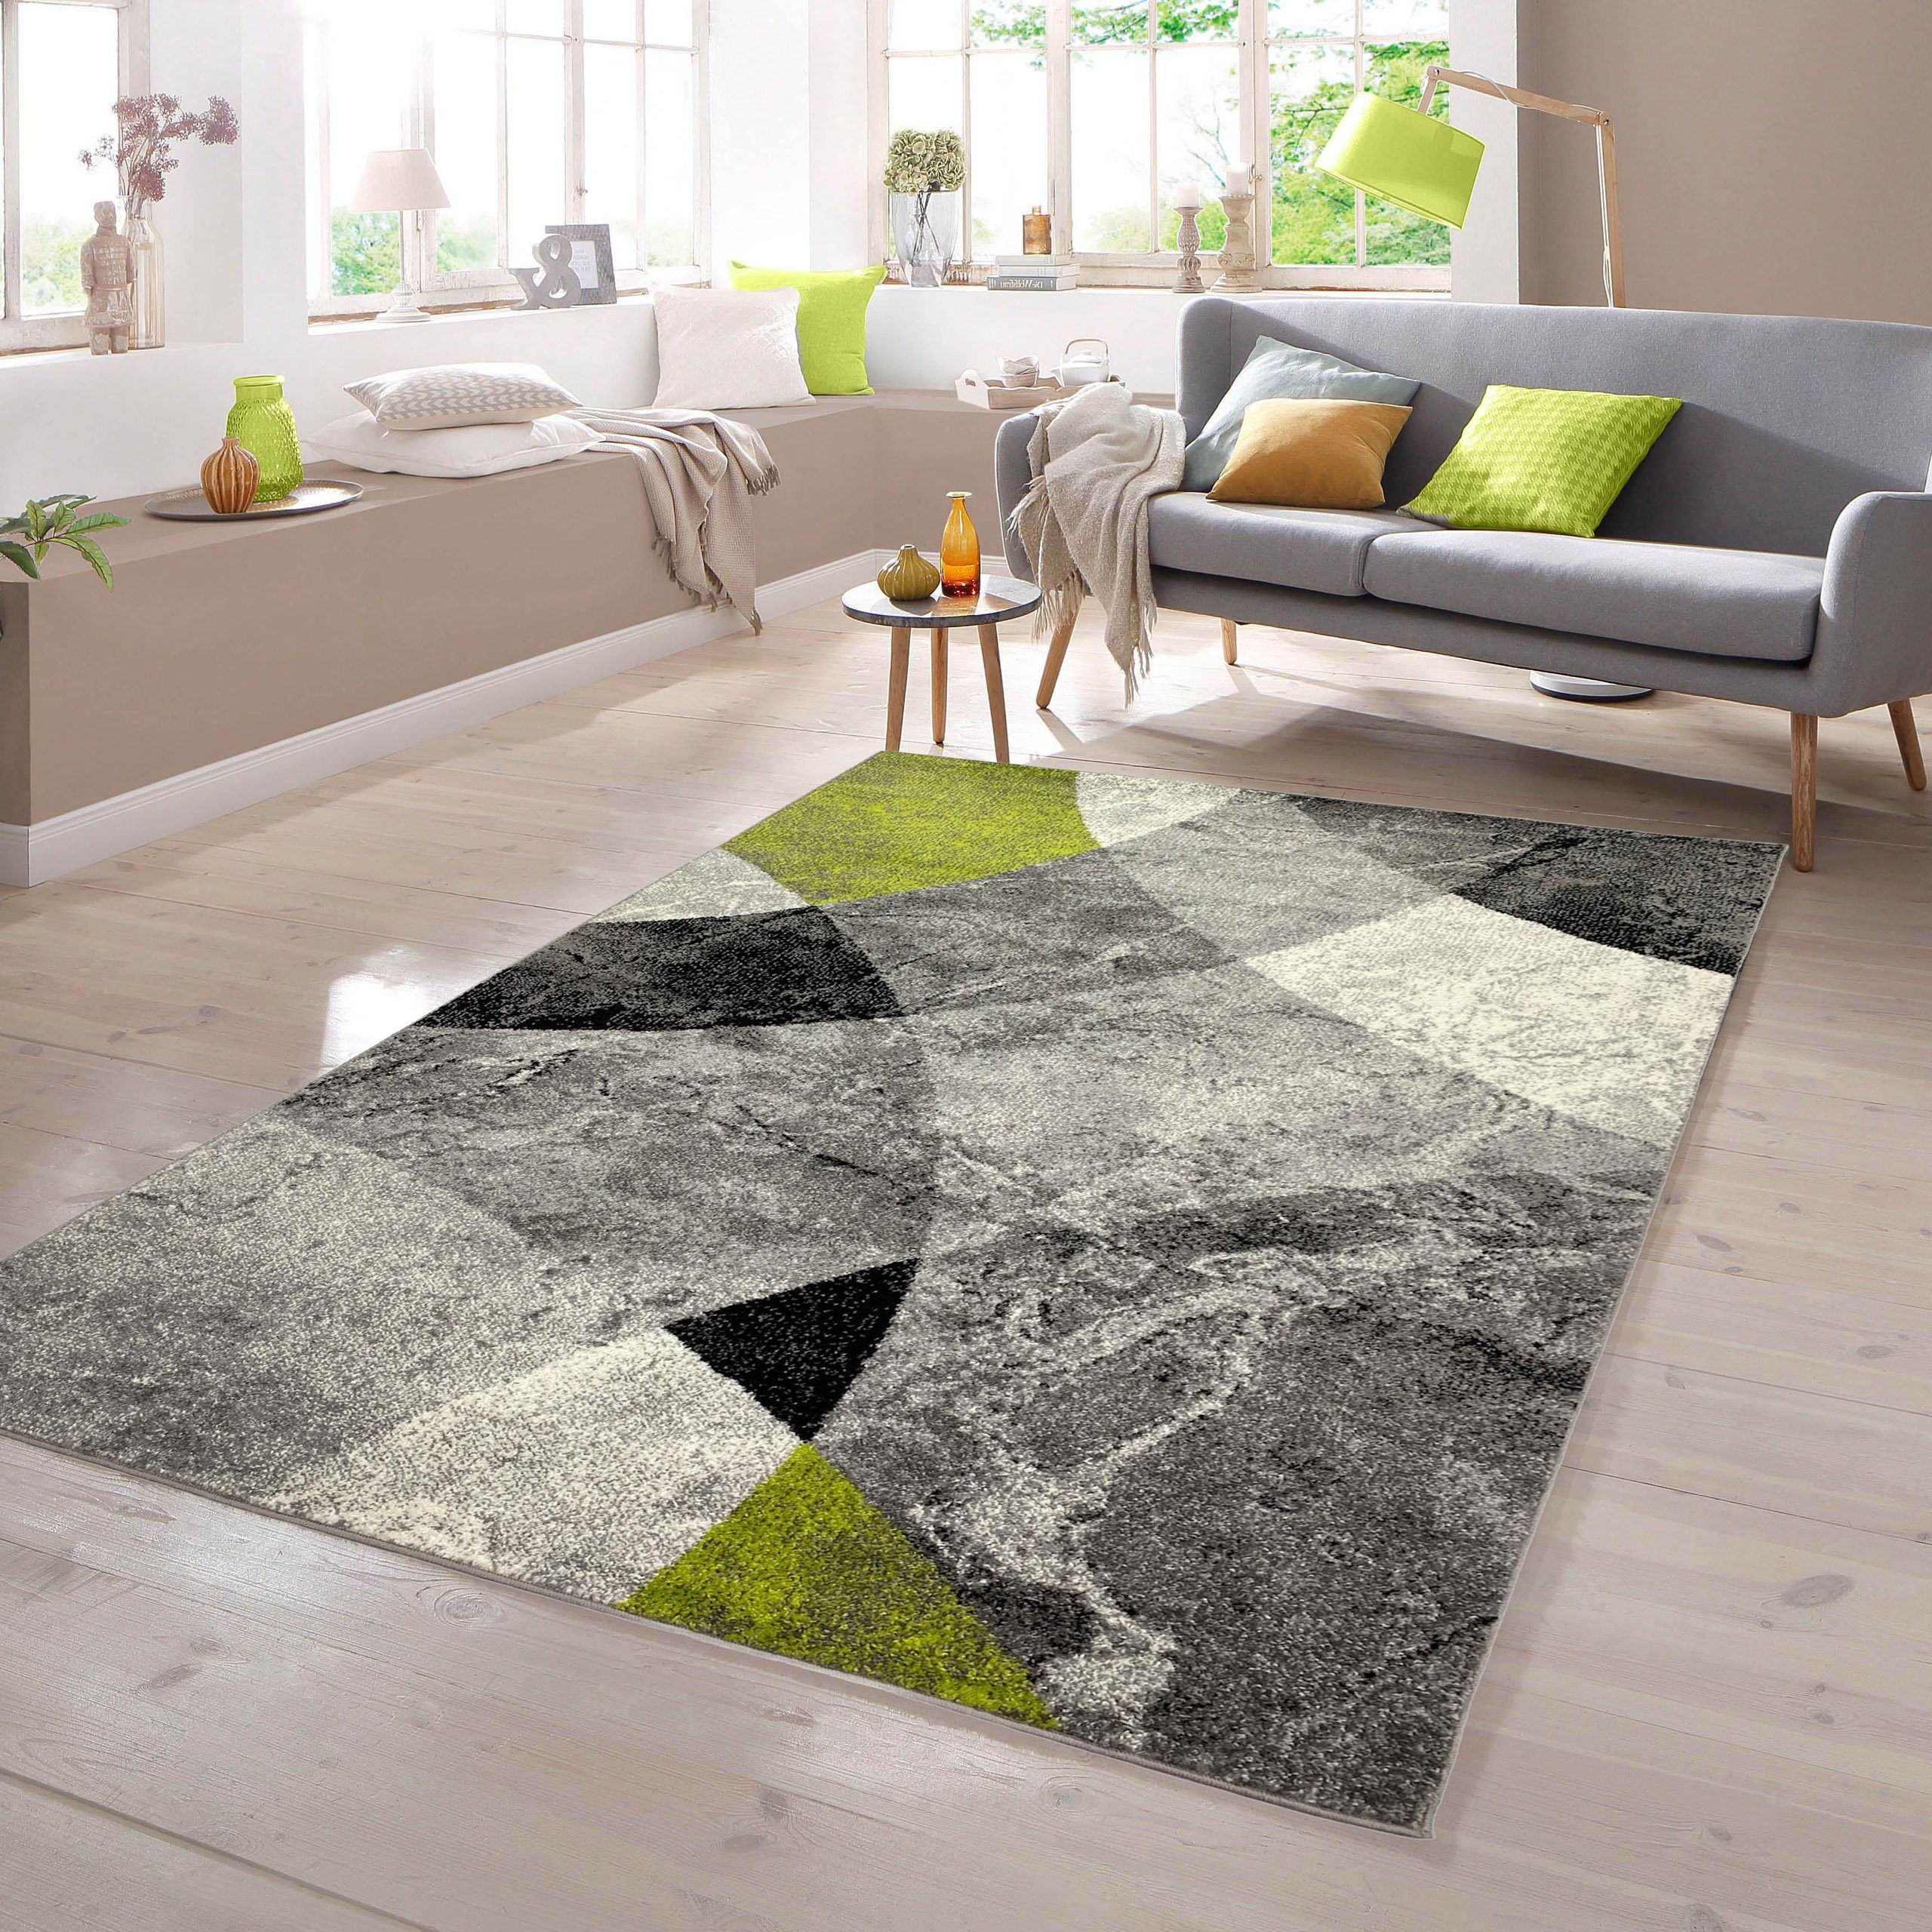 Teppich Teppich Rauten Design grün grau, TeppichHome24, rechteckig